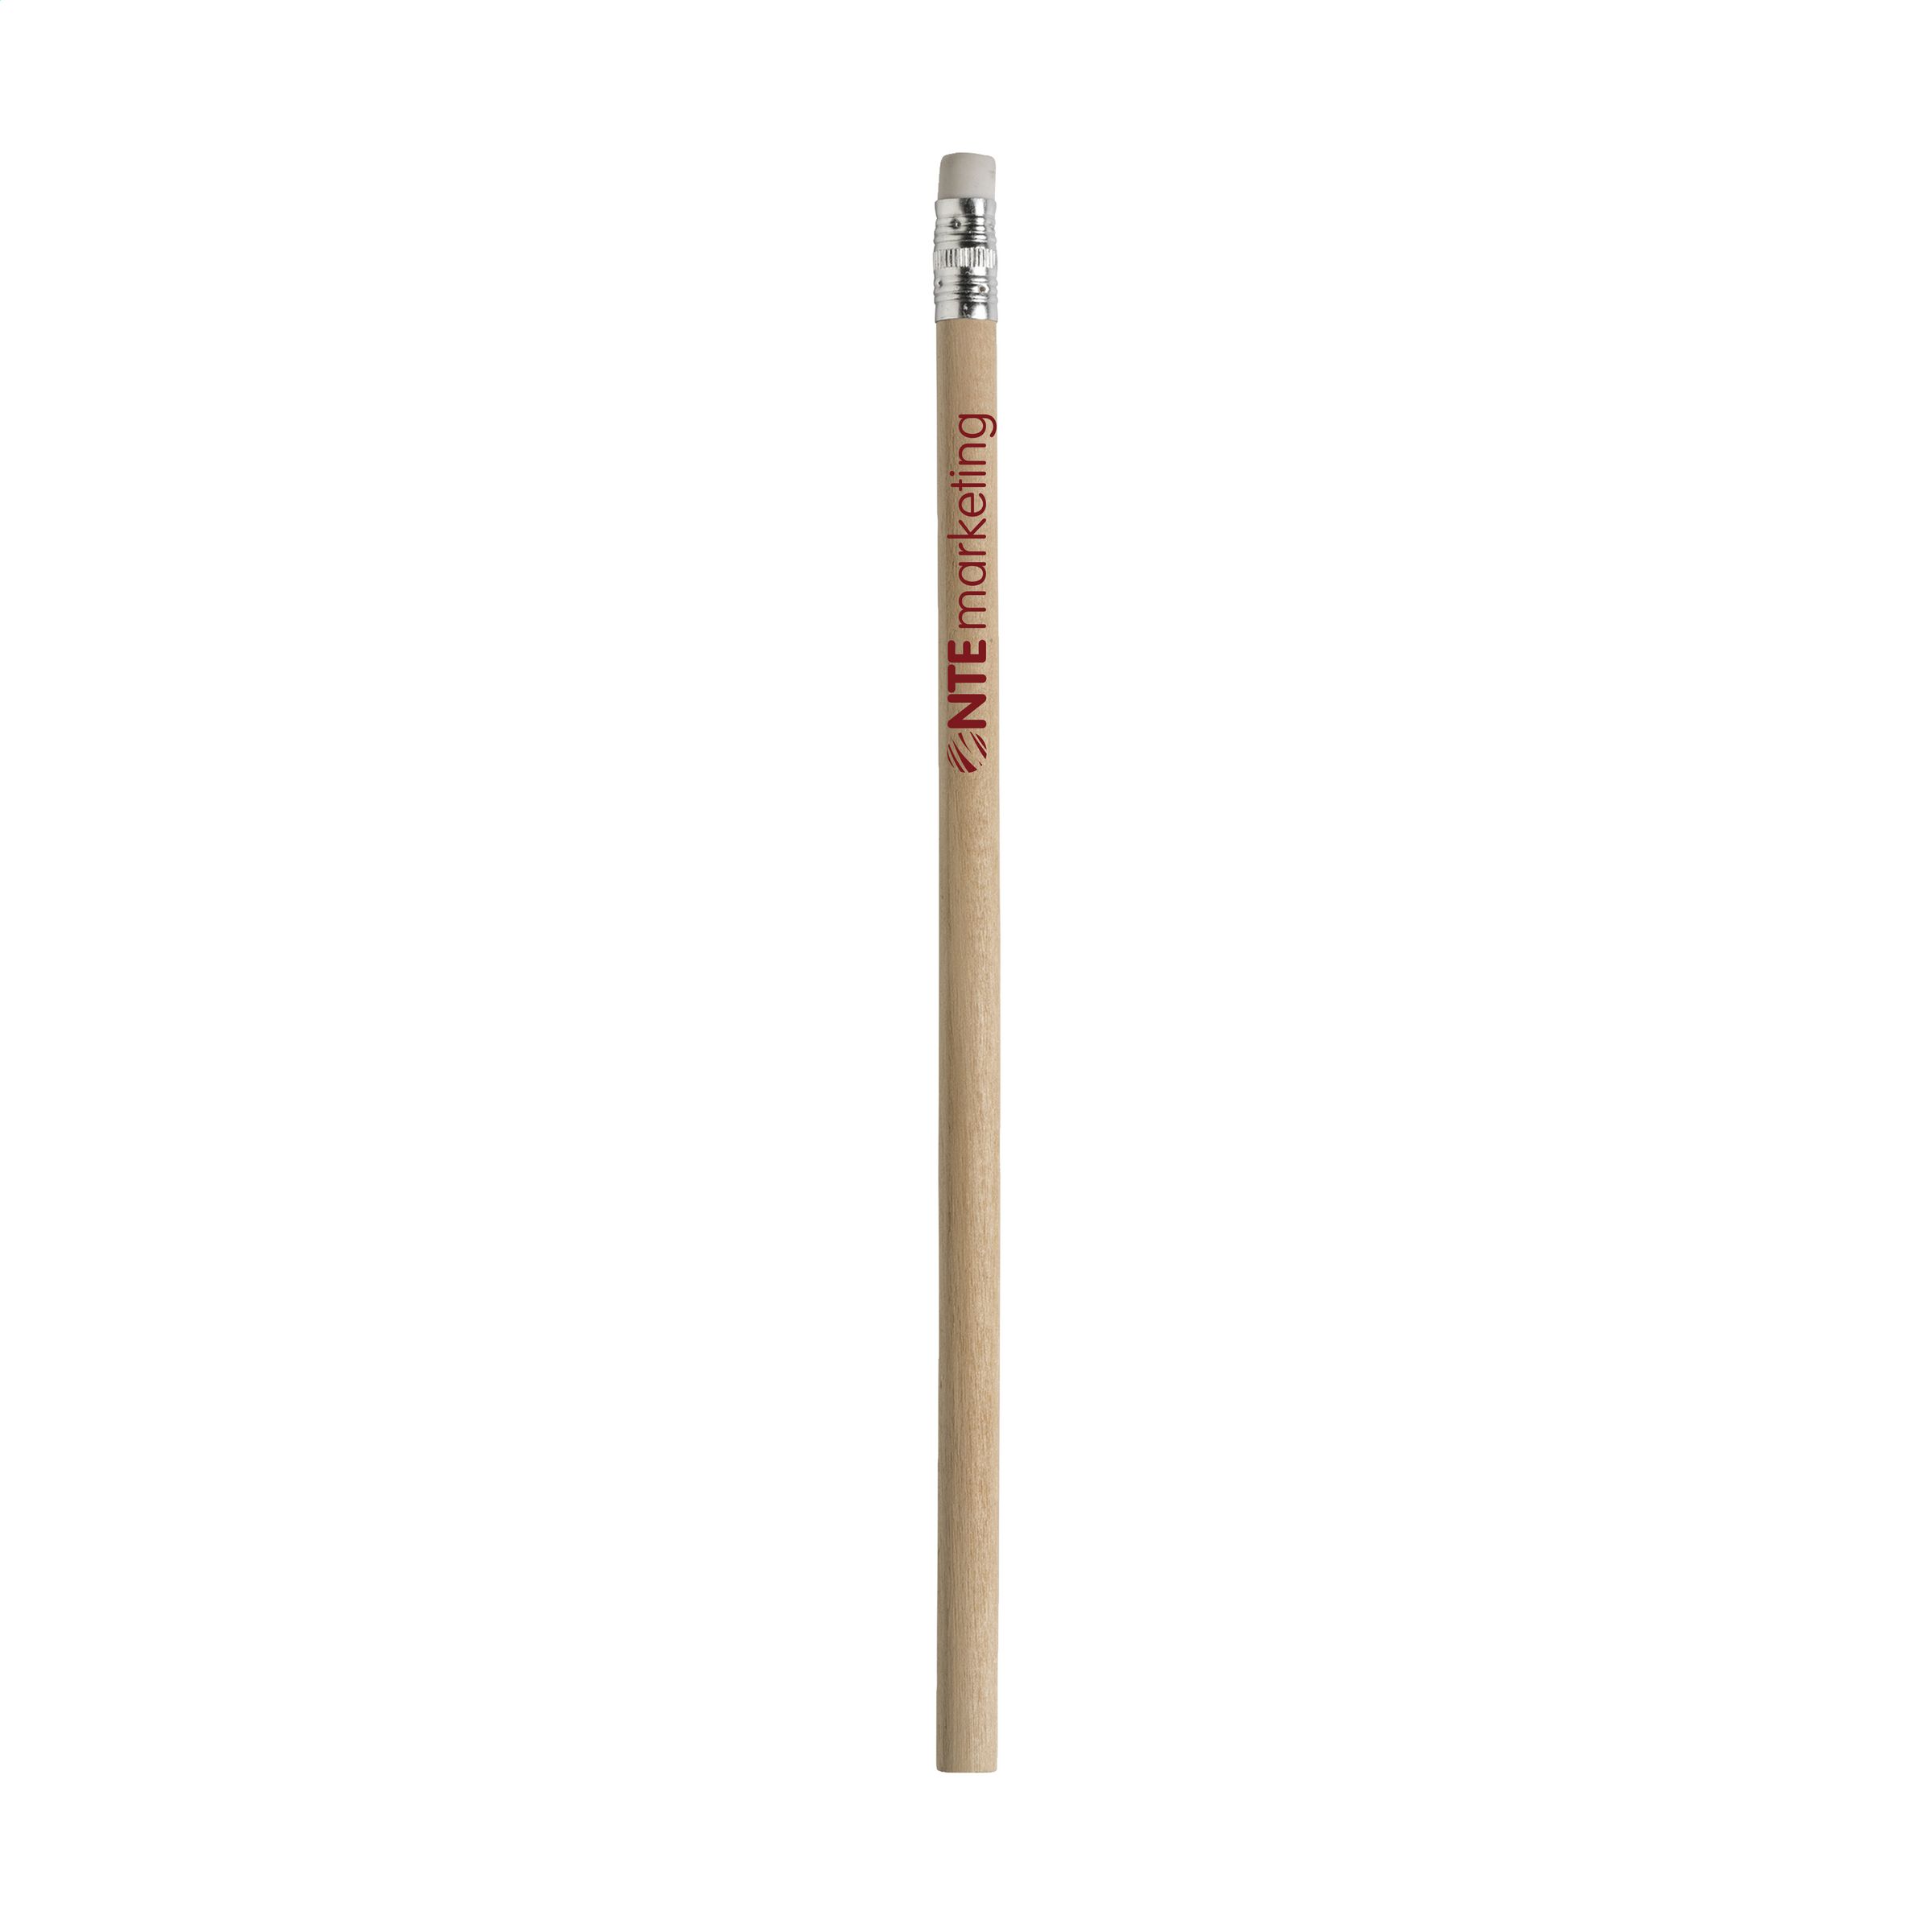 Crayon en bois non vernis HB non taillé avec gomme - Féchain - Zaprinta France